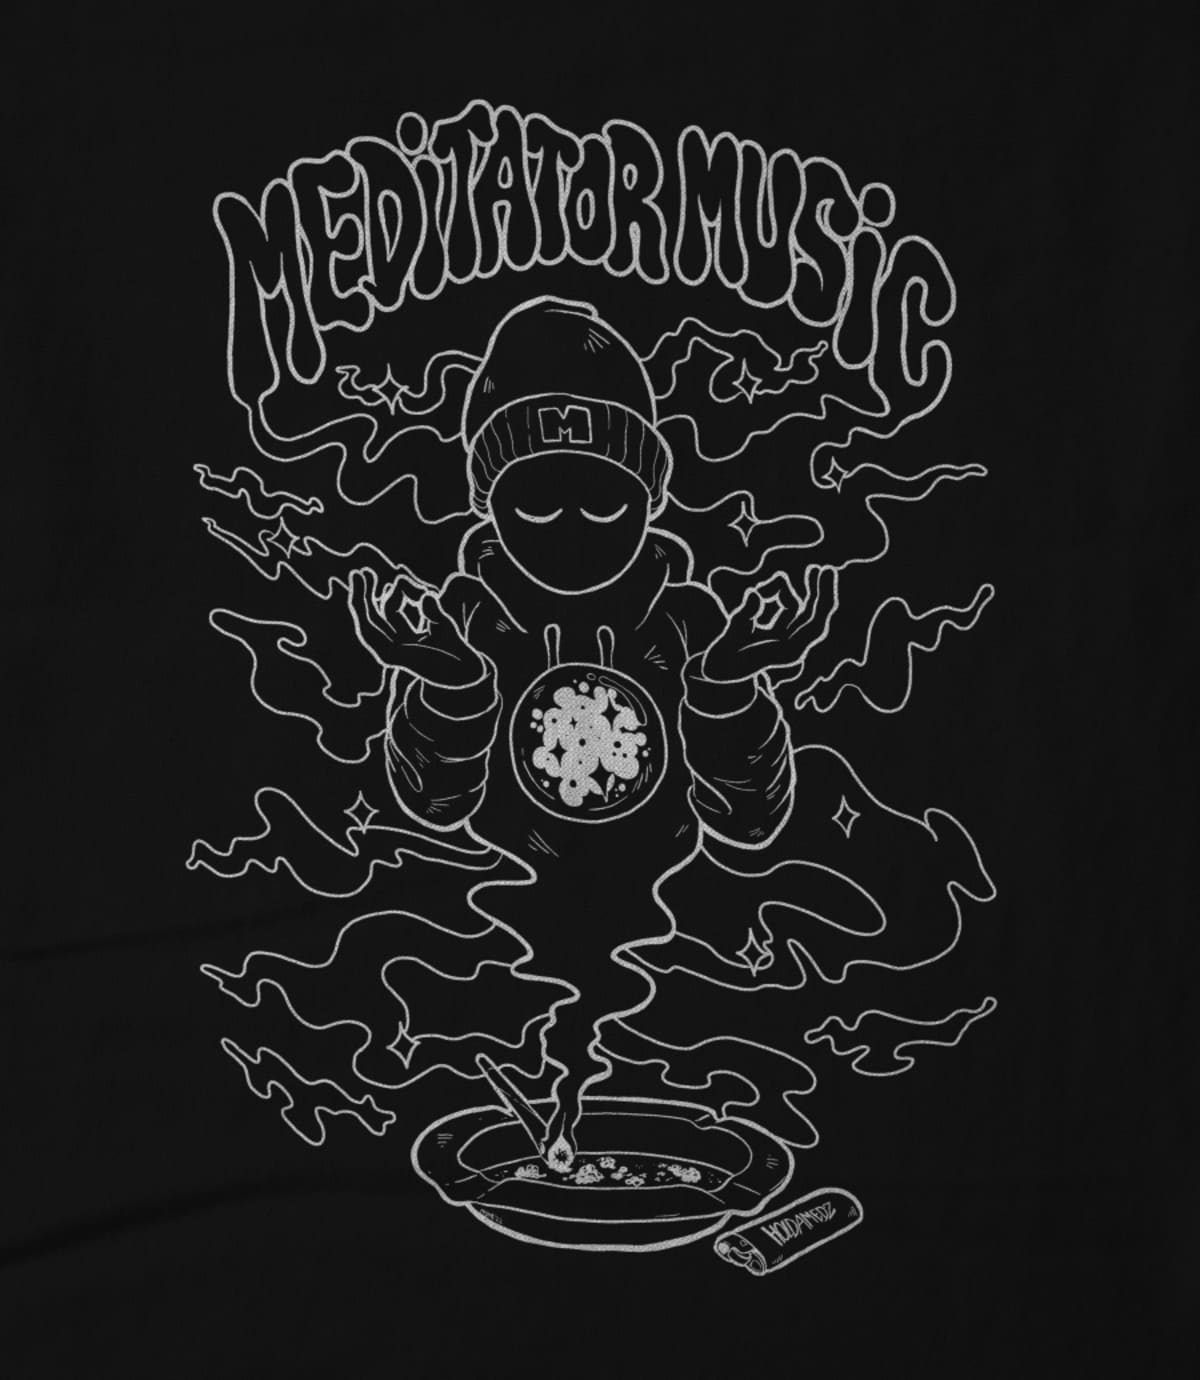 Meditator music medi smoke tee  1 1641941068